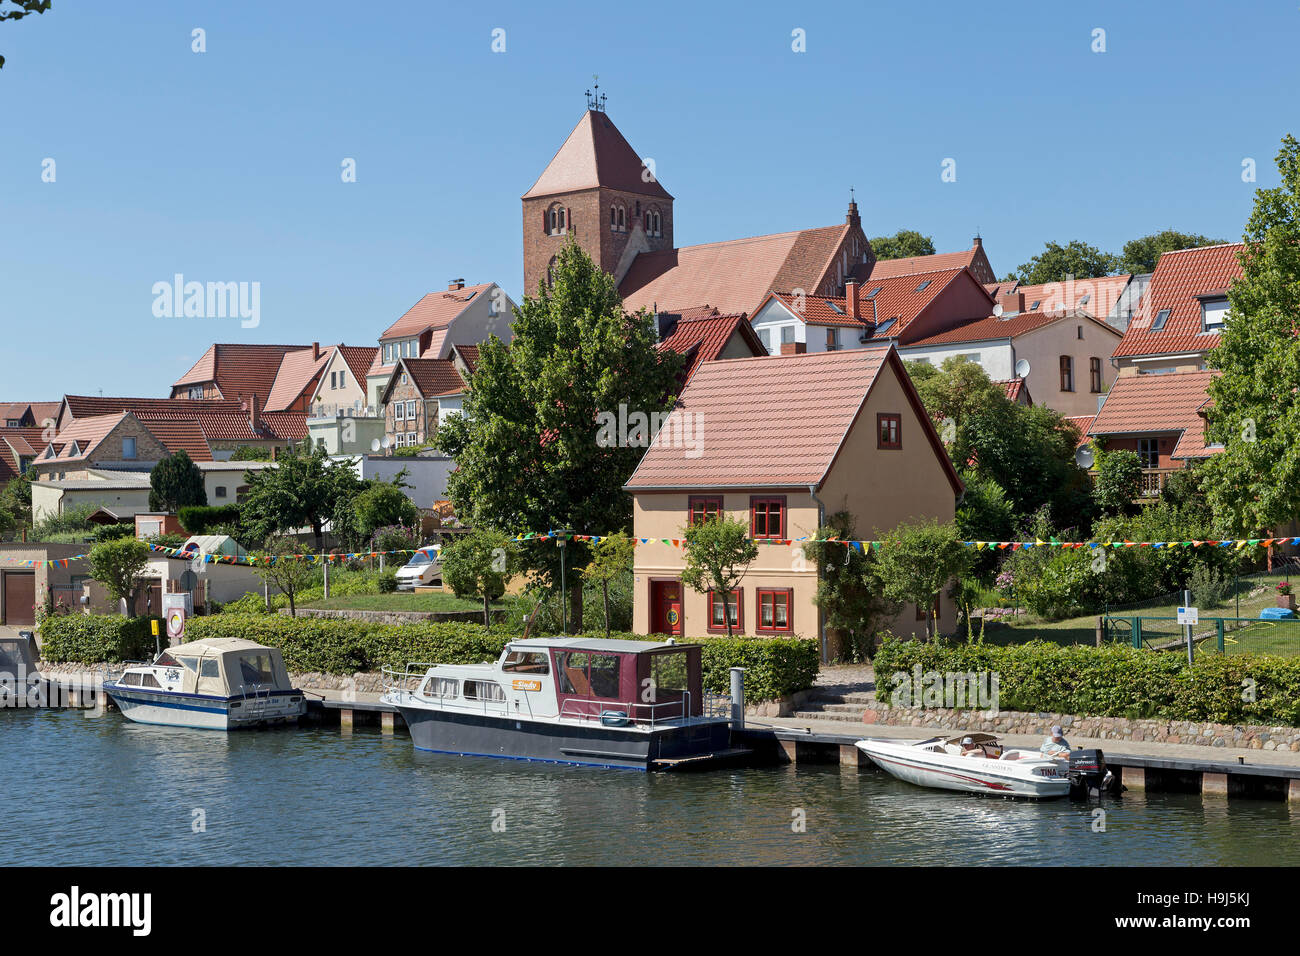 church and River Elde, Plau am See, Mecklenburg Lakes, Mecklenburg-West Pomerania, Germany Stock Photo